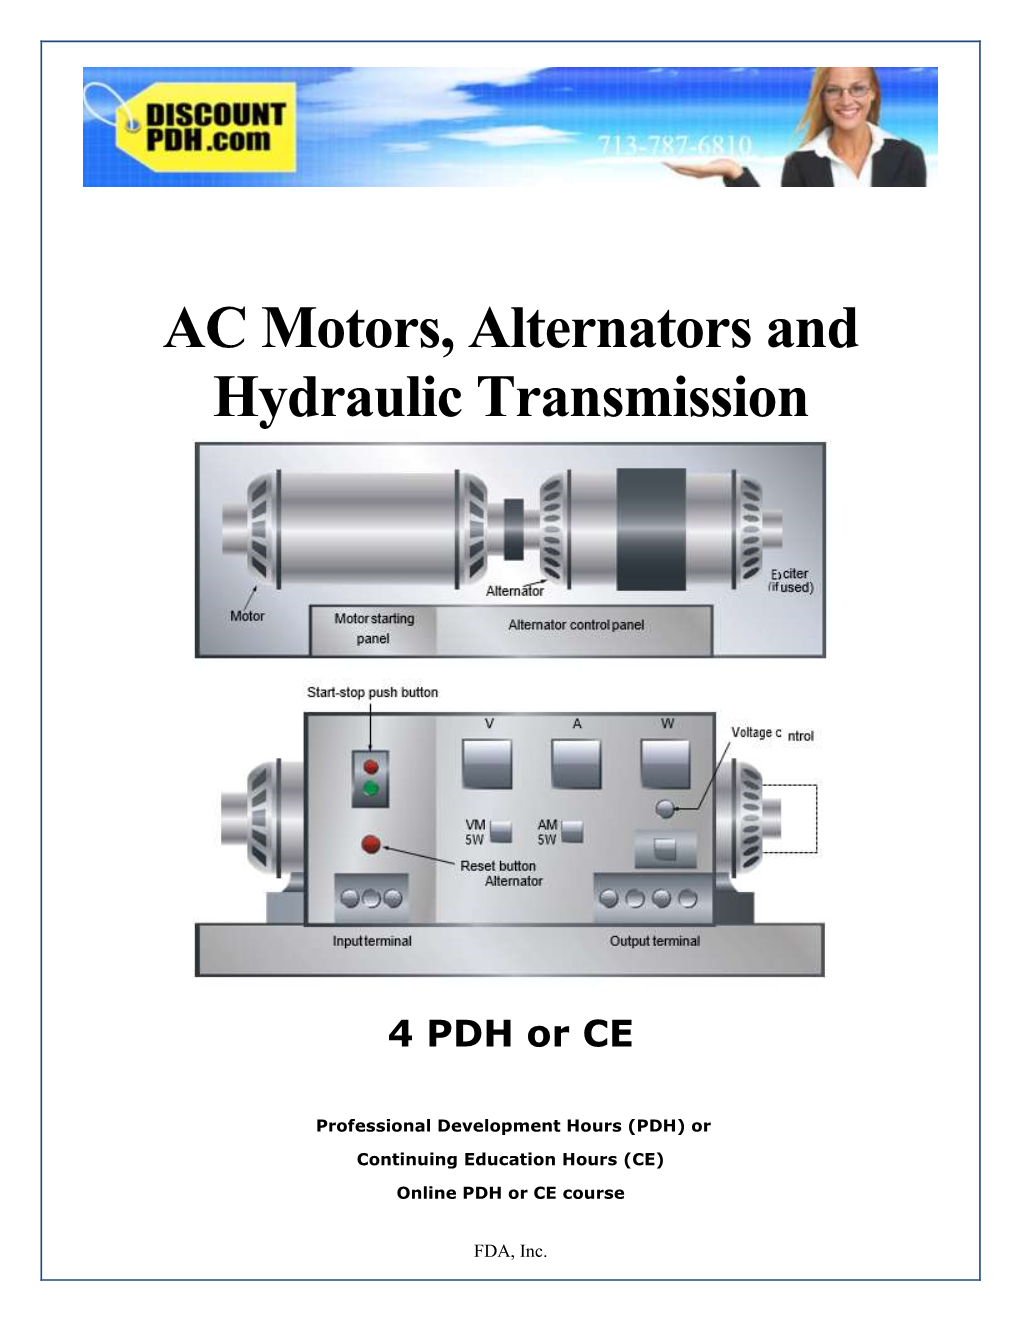 AC Motors, Alternators and Hydraulic Transmission